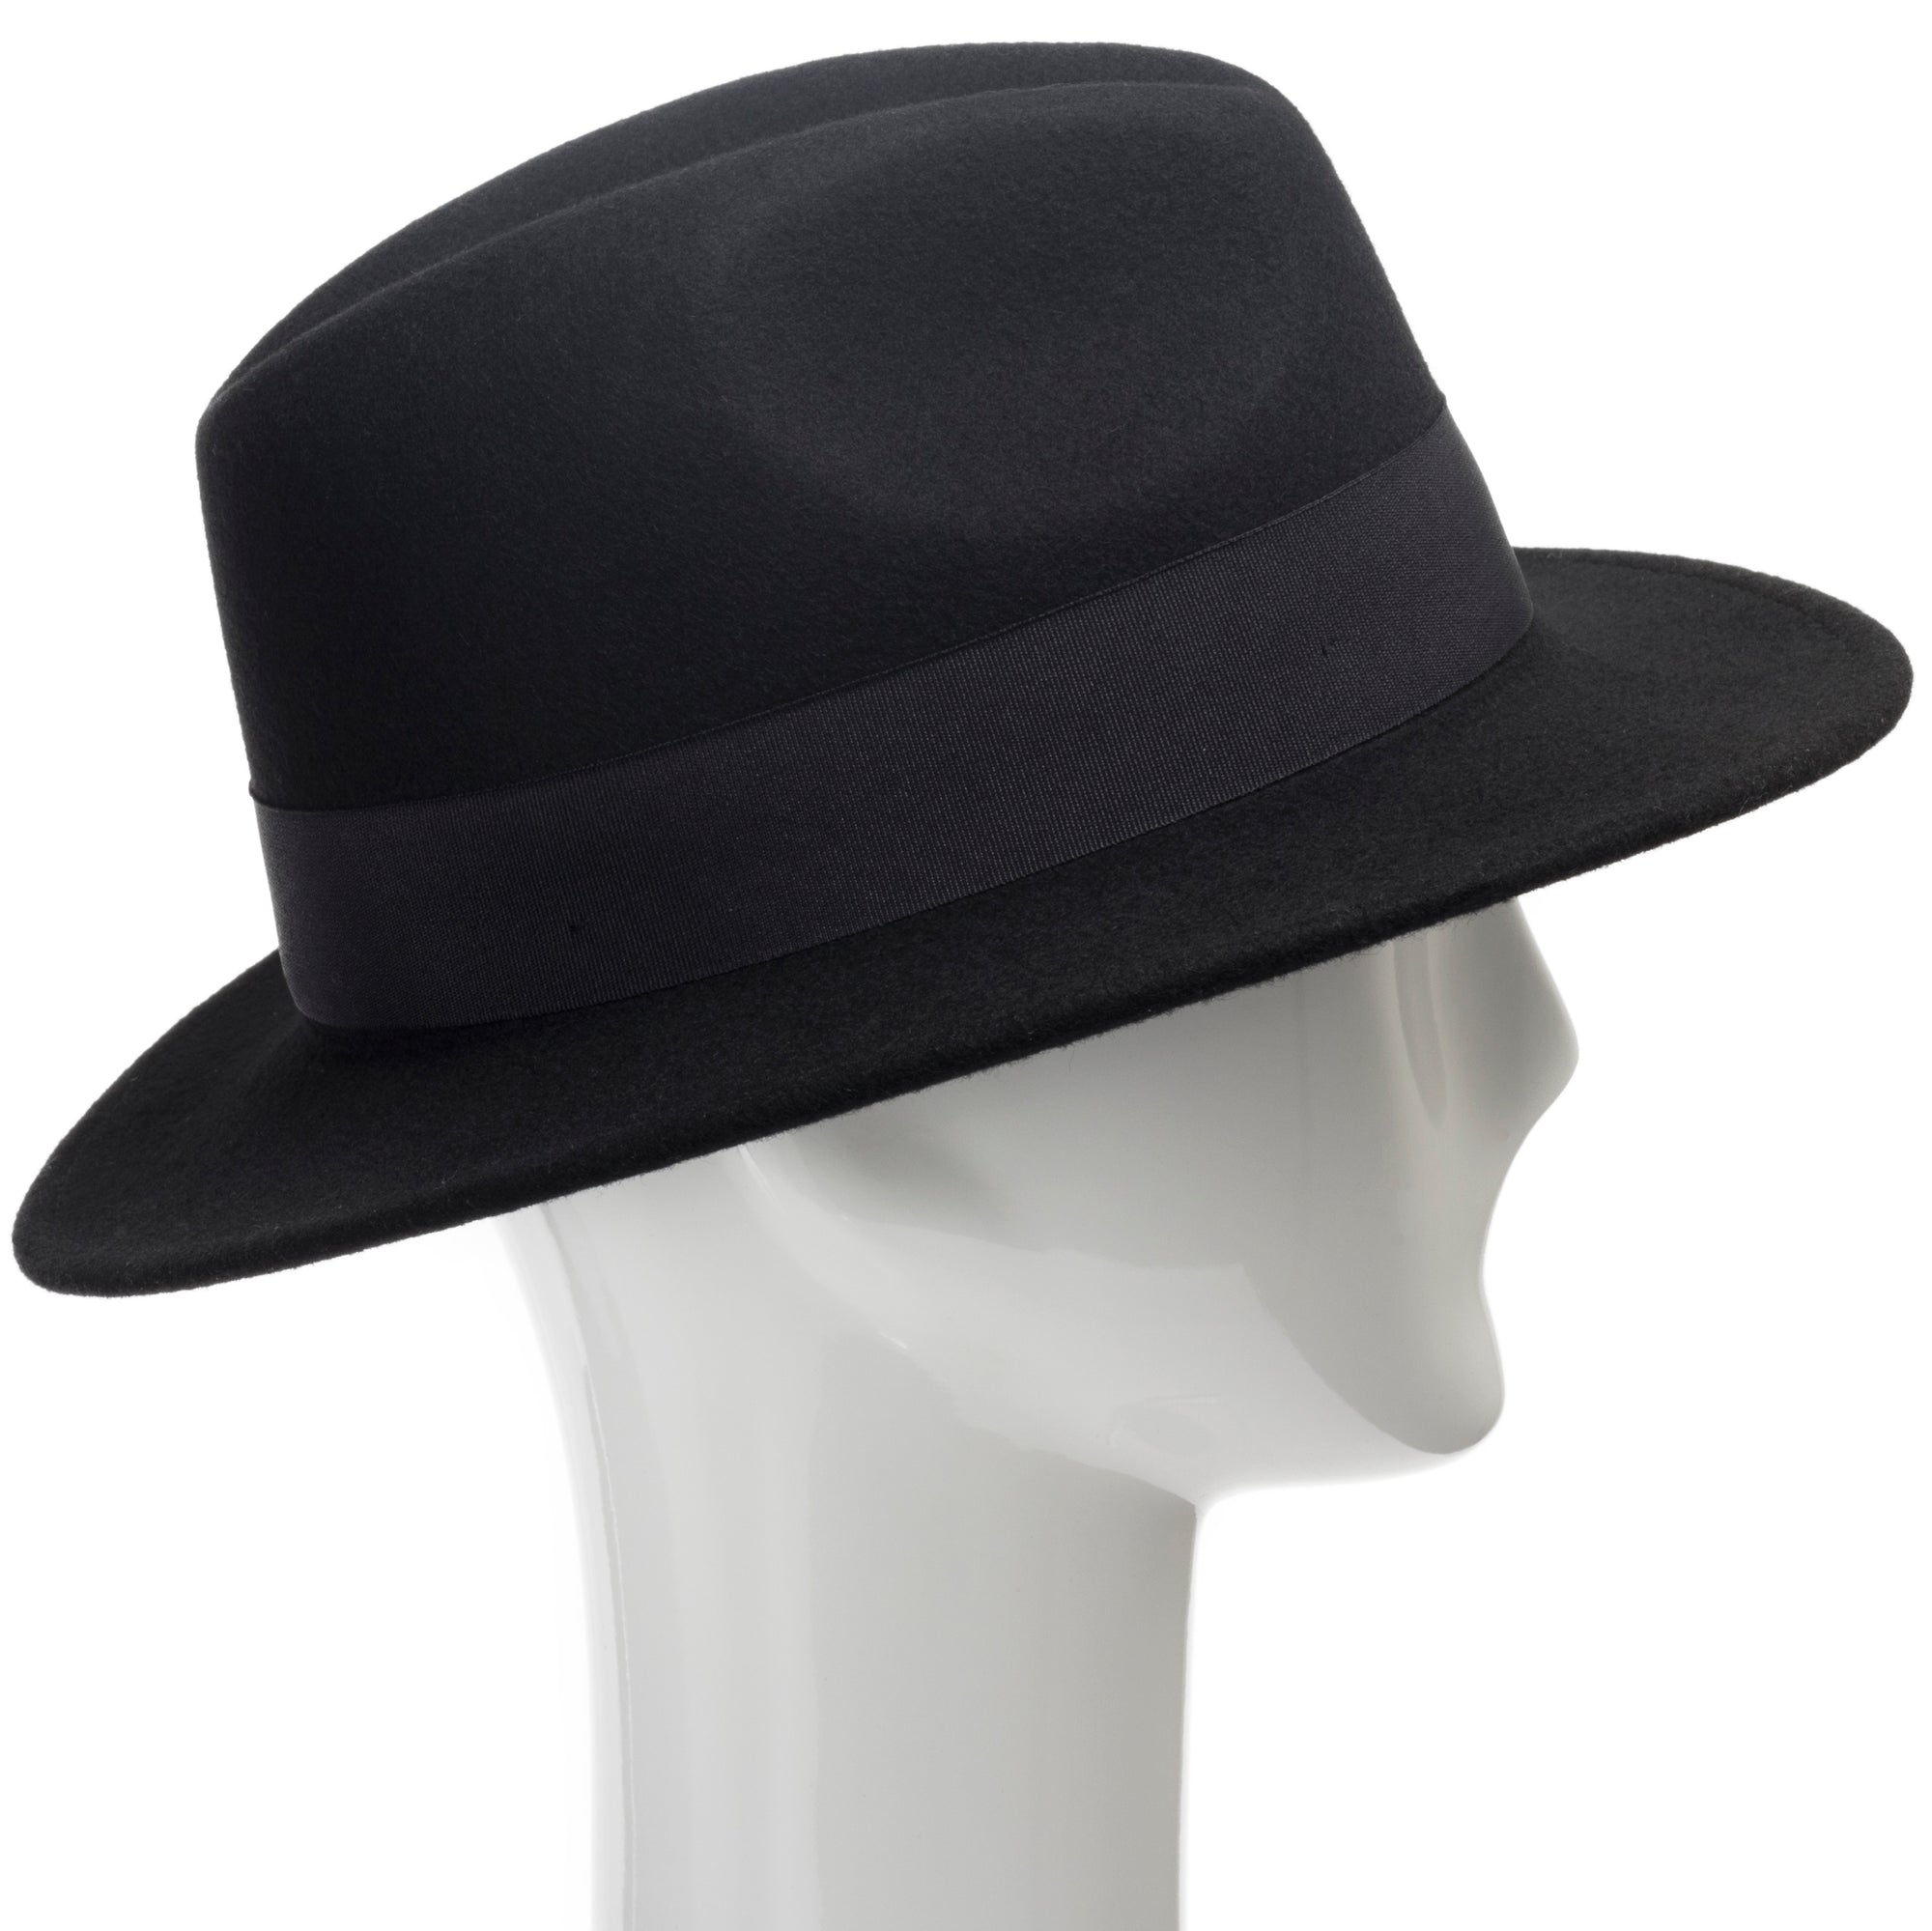 Saint Laurent Fedora Hat